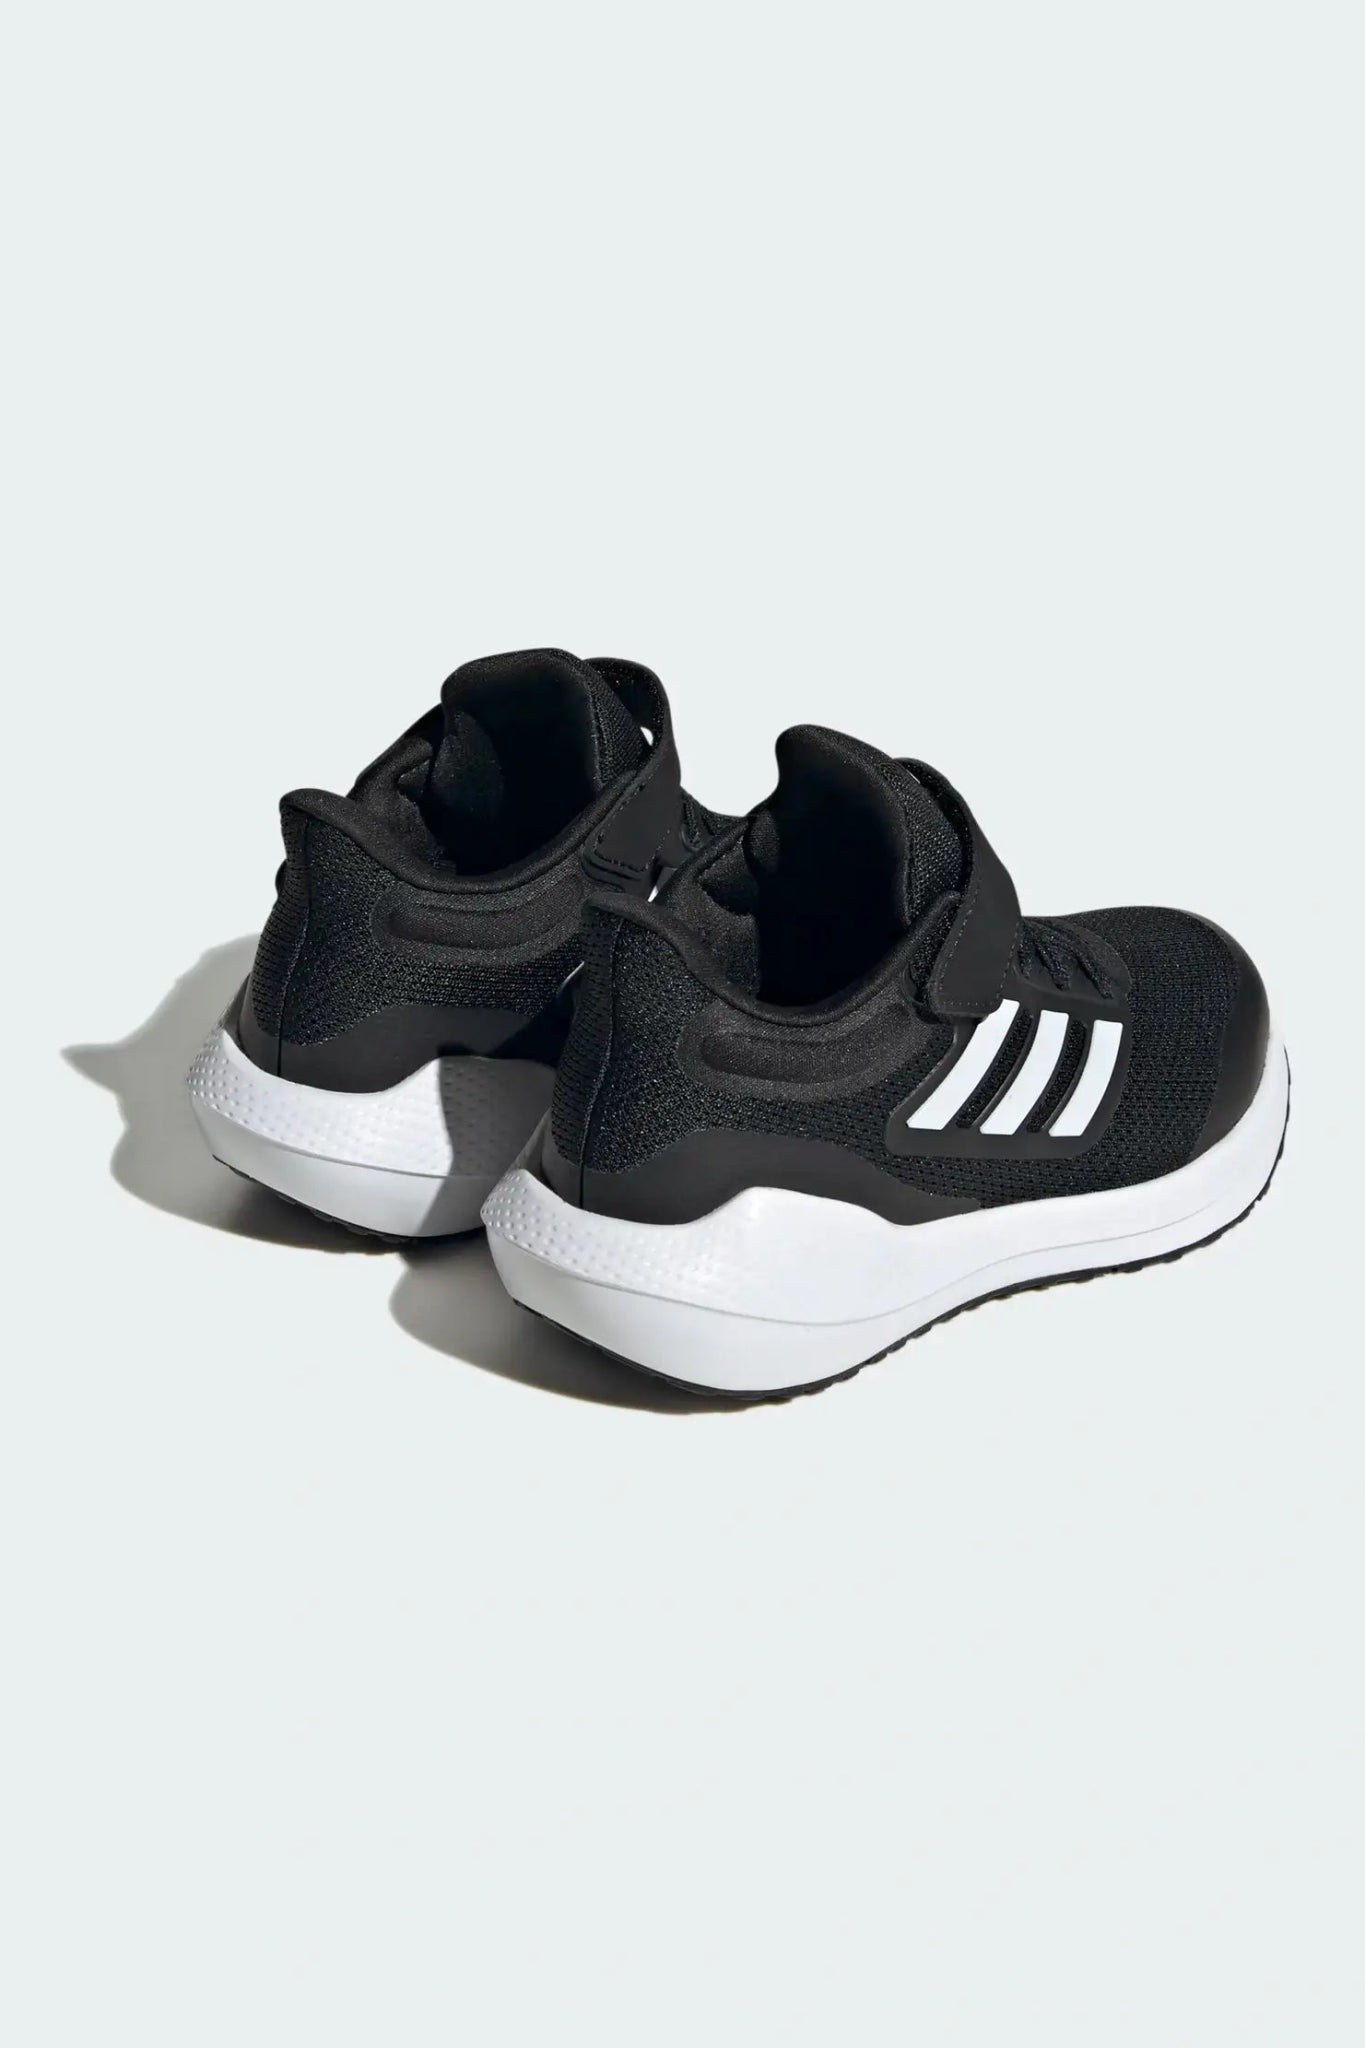 ADIDAS - נעלי ספורט ULTRABOUNCE לילדים בצבע שחור - MASHBIR//365